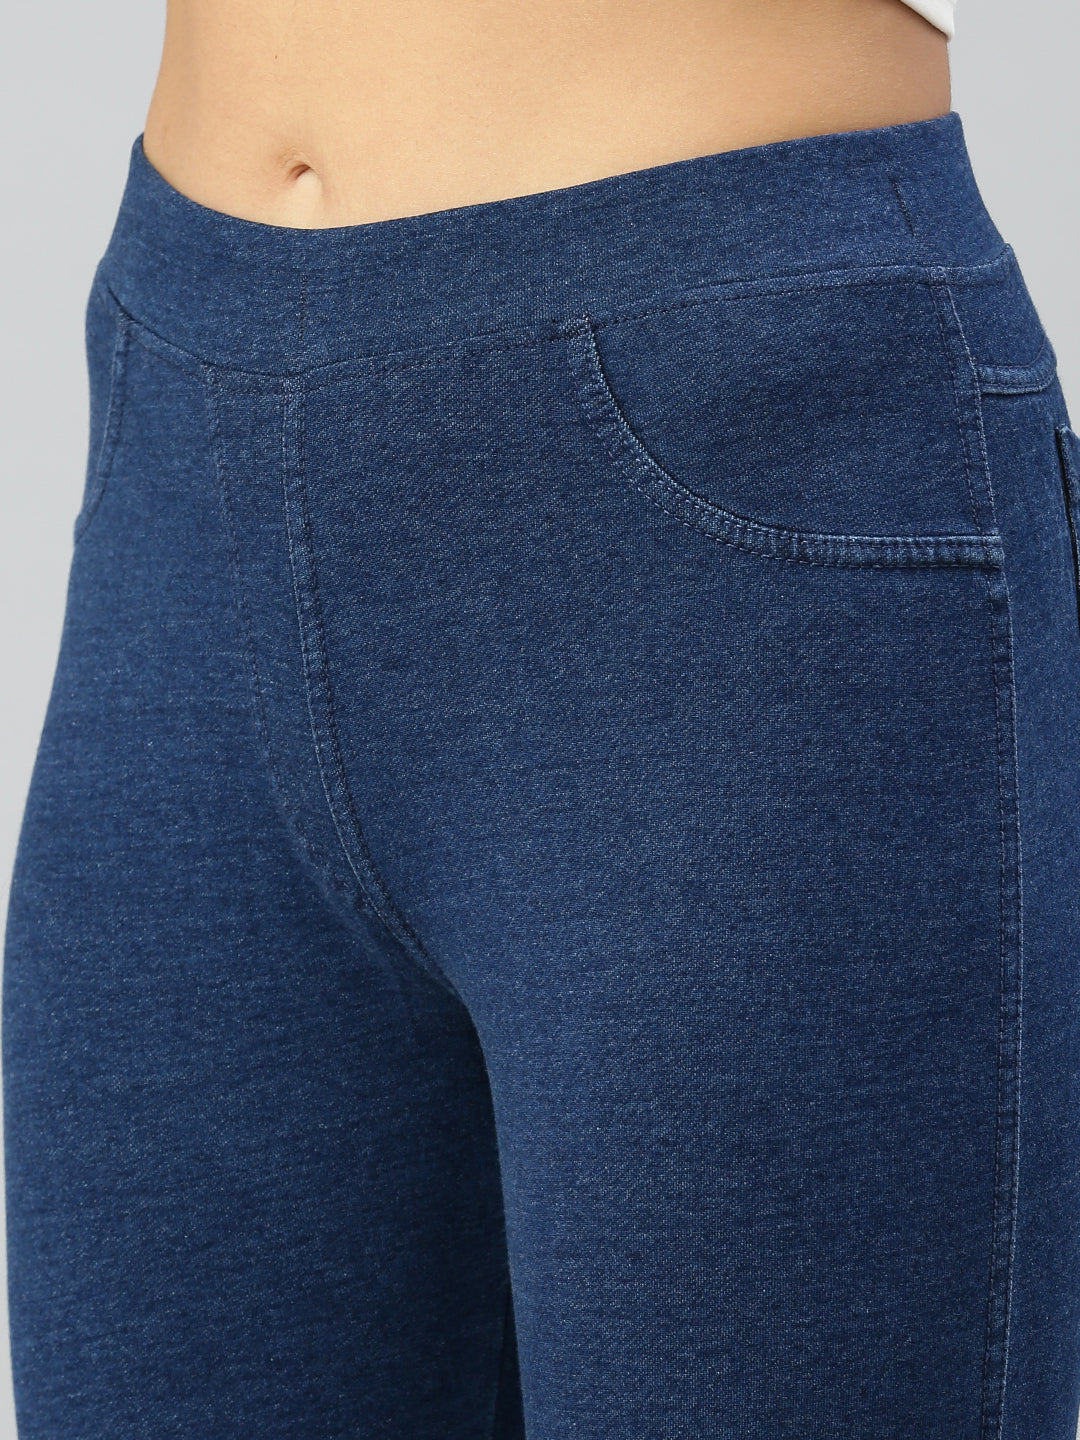 Soft Surroundings Elastic Waist Denim Leggings & Jeggings for Women |  Mercari